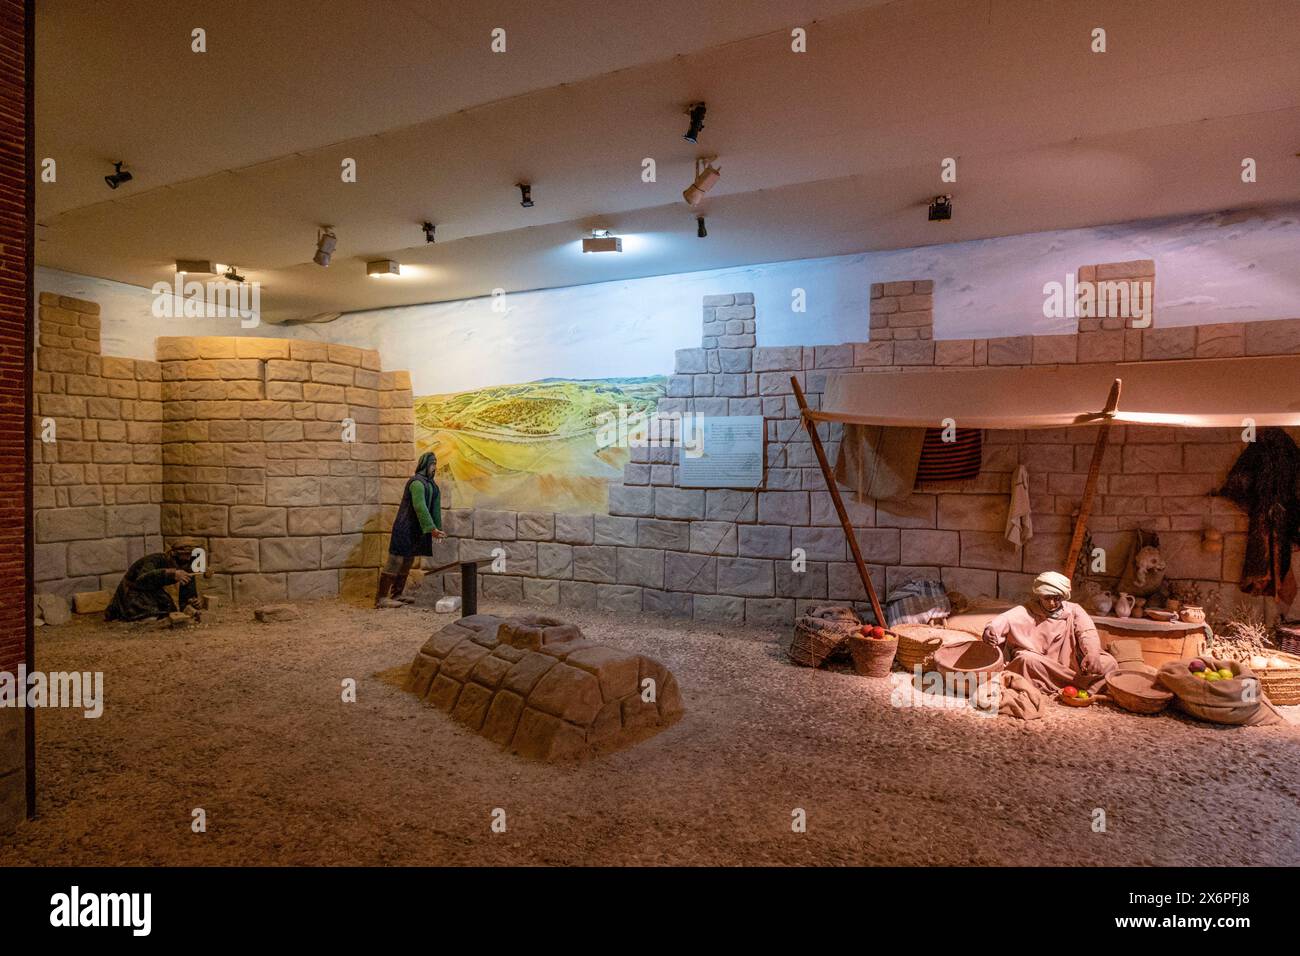 recreation of the Arab village, Aula archaeologica, Medinaceli, Soria, autonomous community of Castilla y León, Spain, Europe. Stock Photo